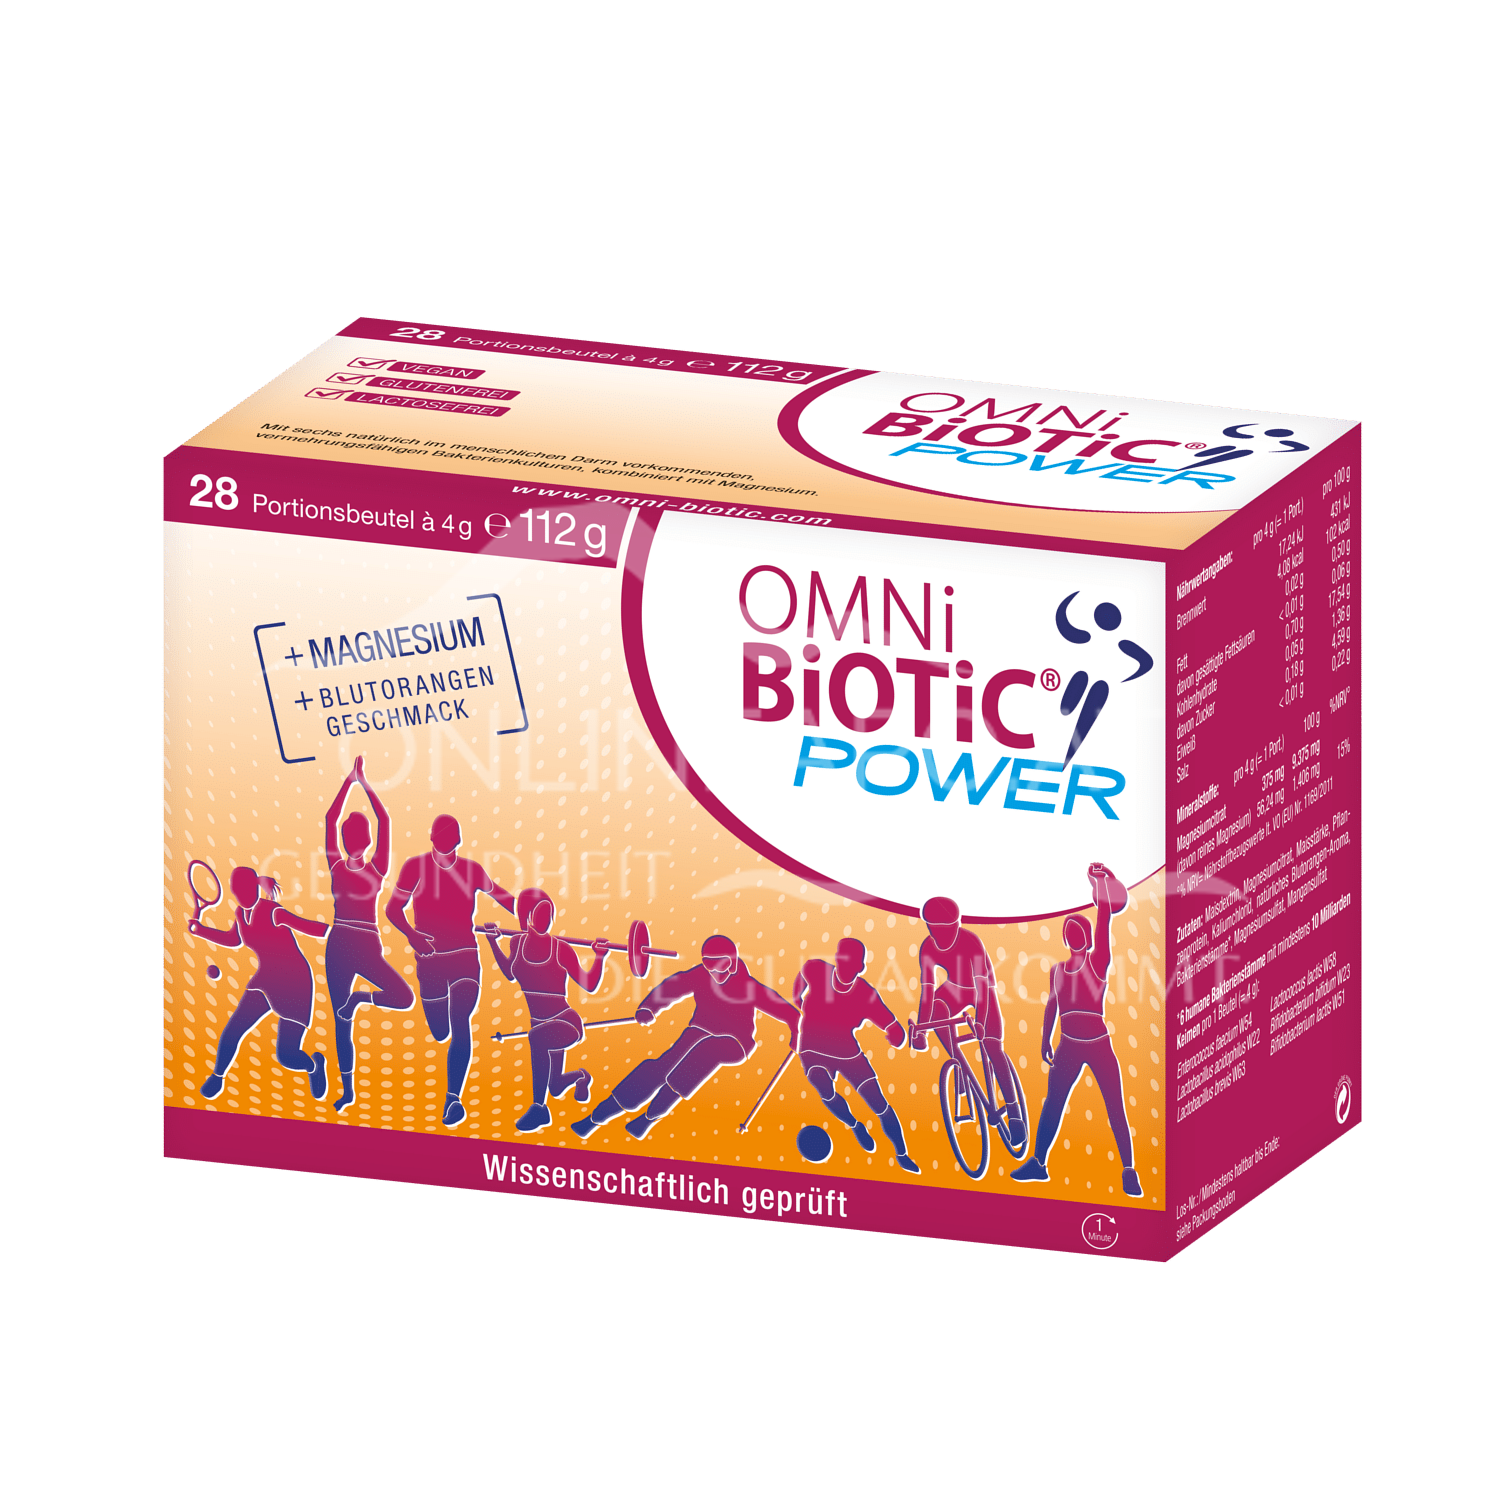 OMNi-BiOTiC® POWER 4g Sachets Blutorange